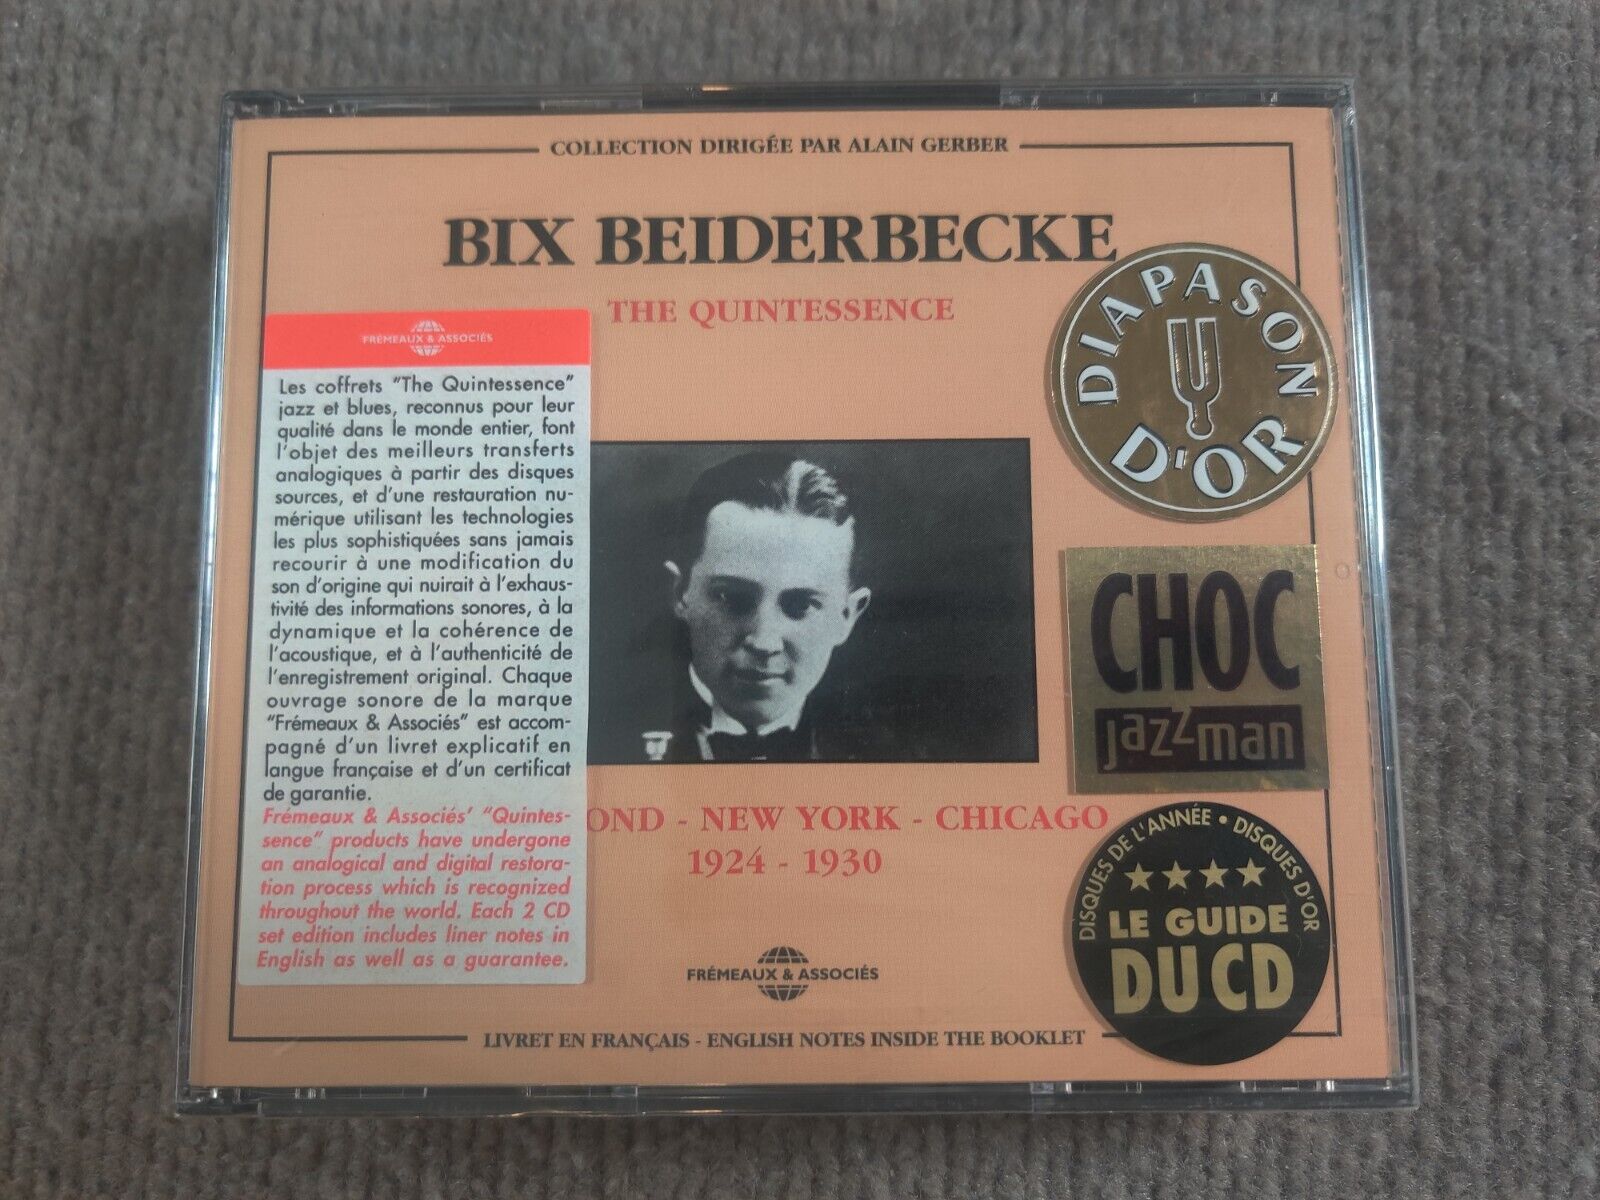 Bix Beiderbecke -The Quintessence Richmond New York Chicago 1924-1930 2 CD Set